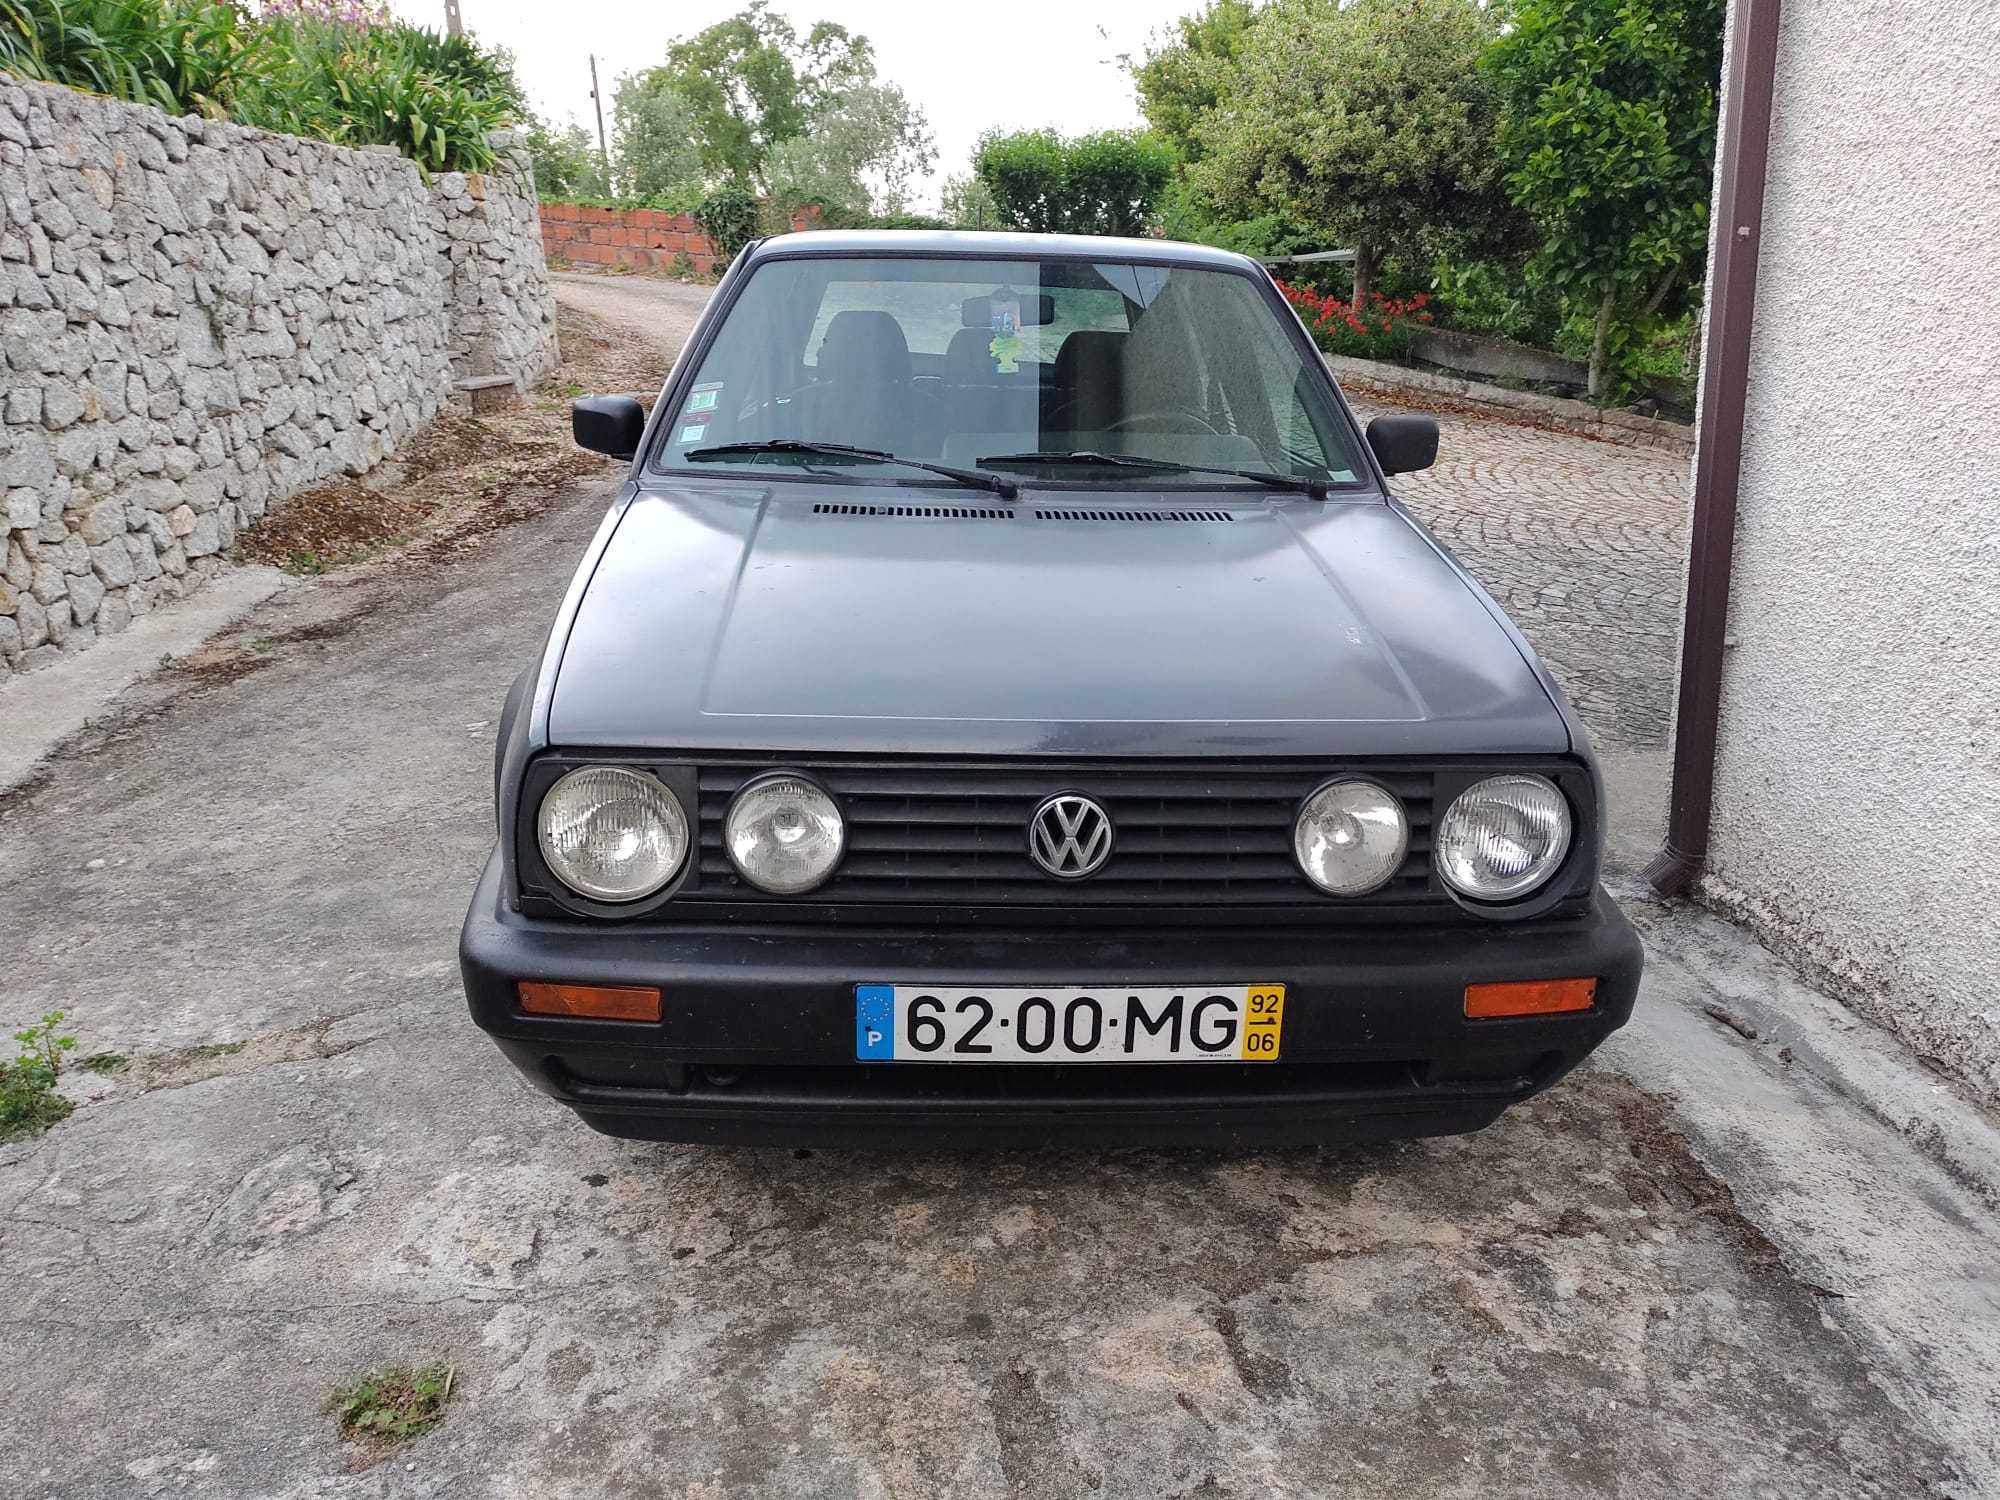 Vendo  Volkswagen Golf mk2 portas 1992
Distribuição mudada